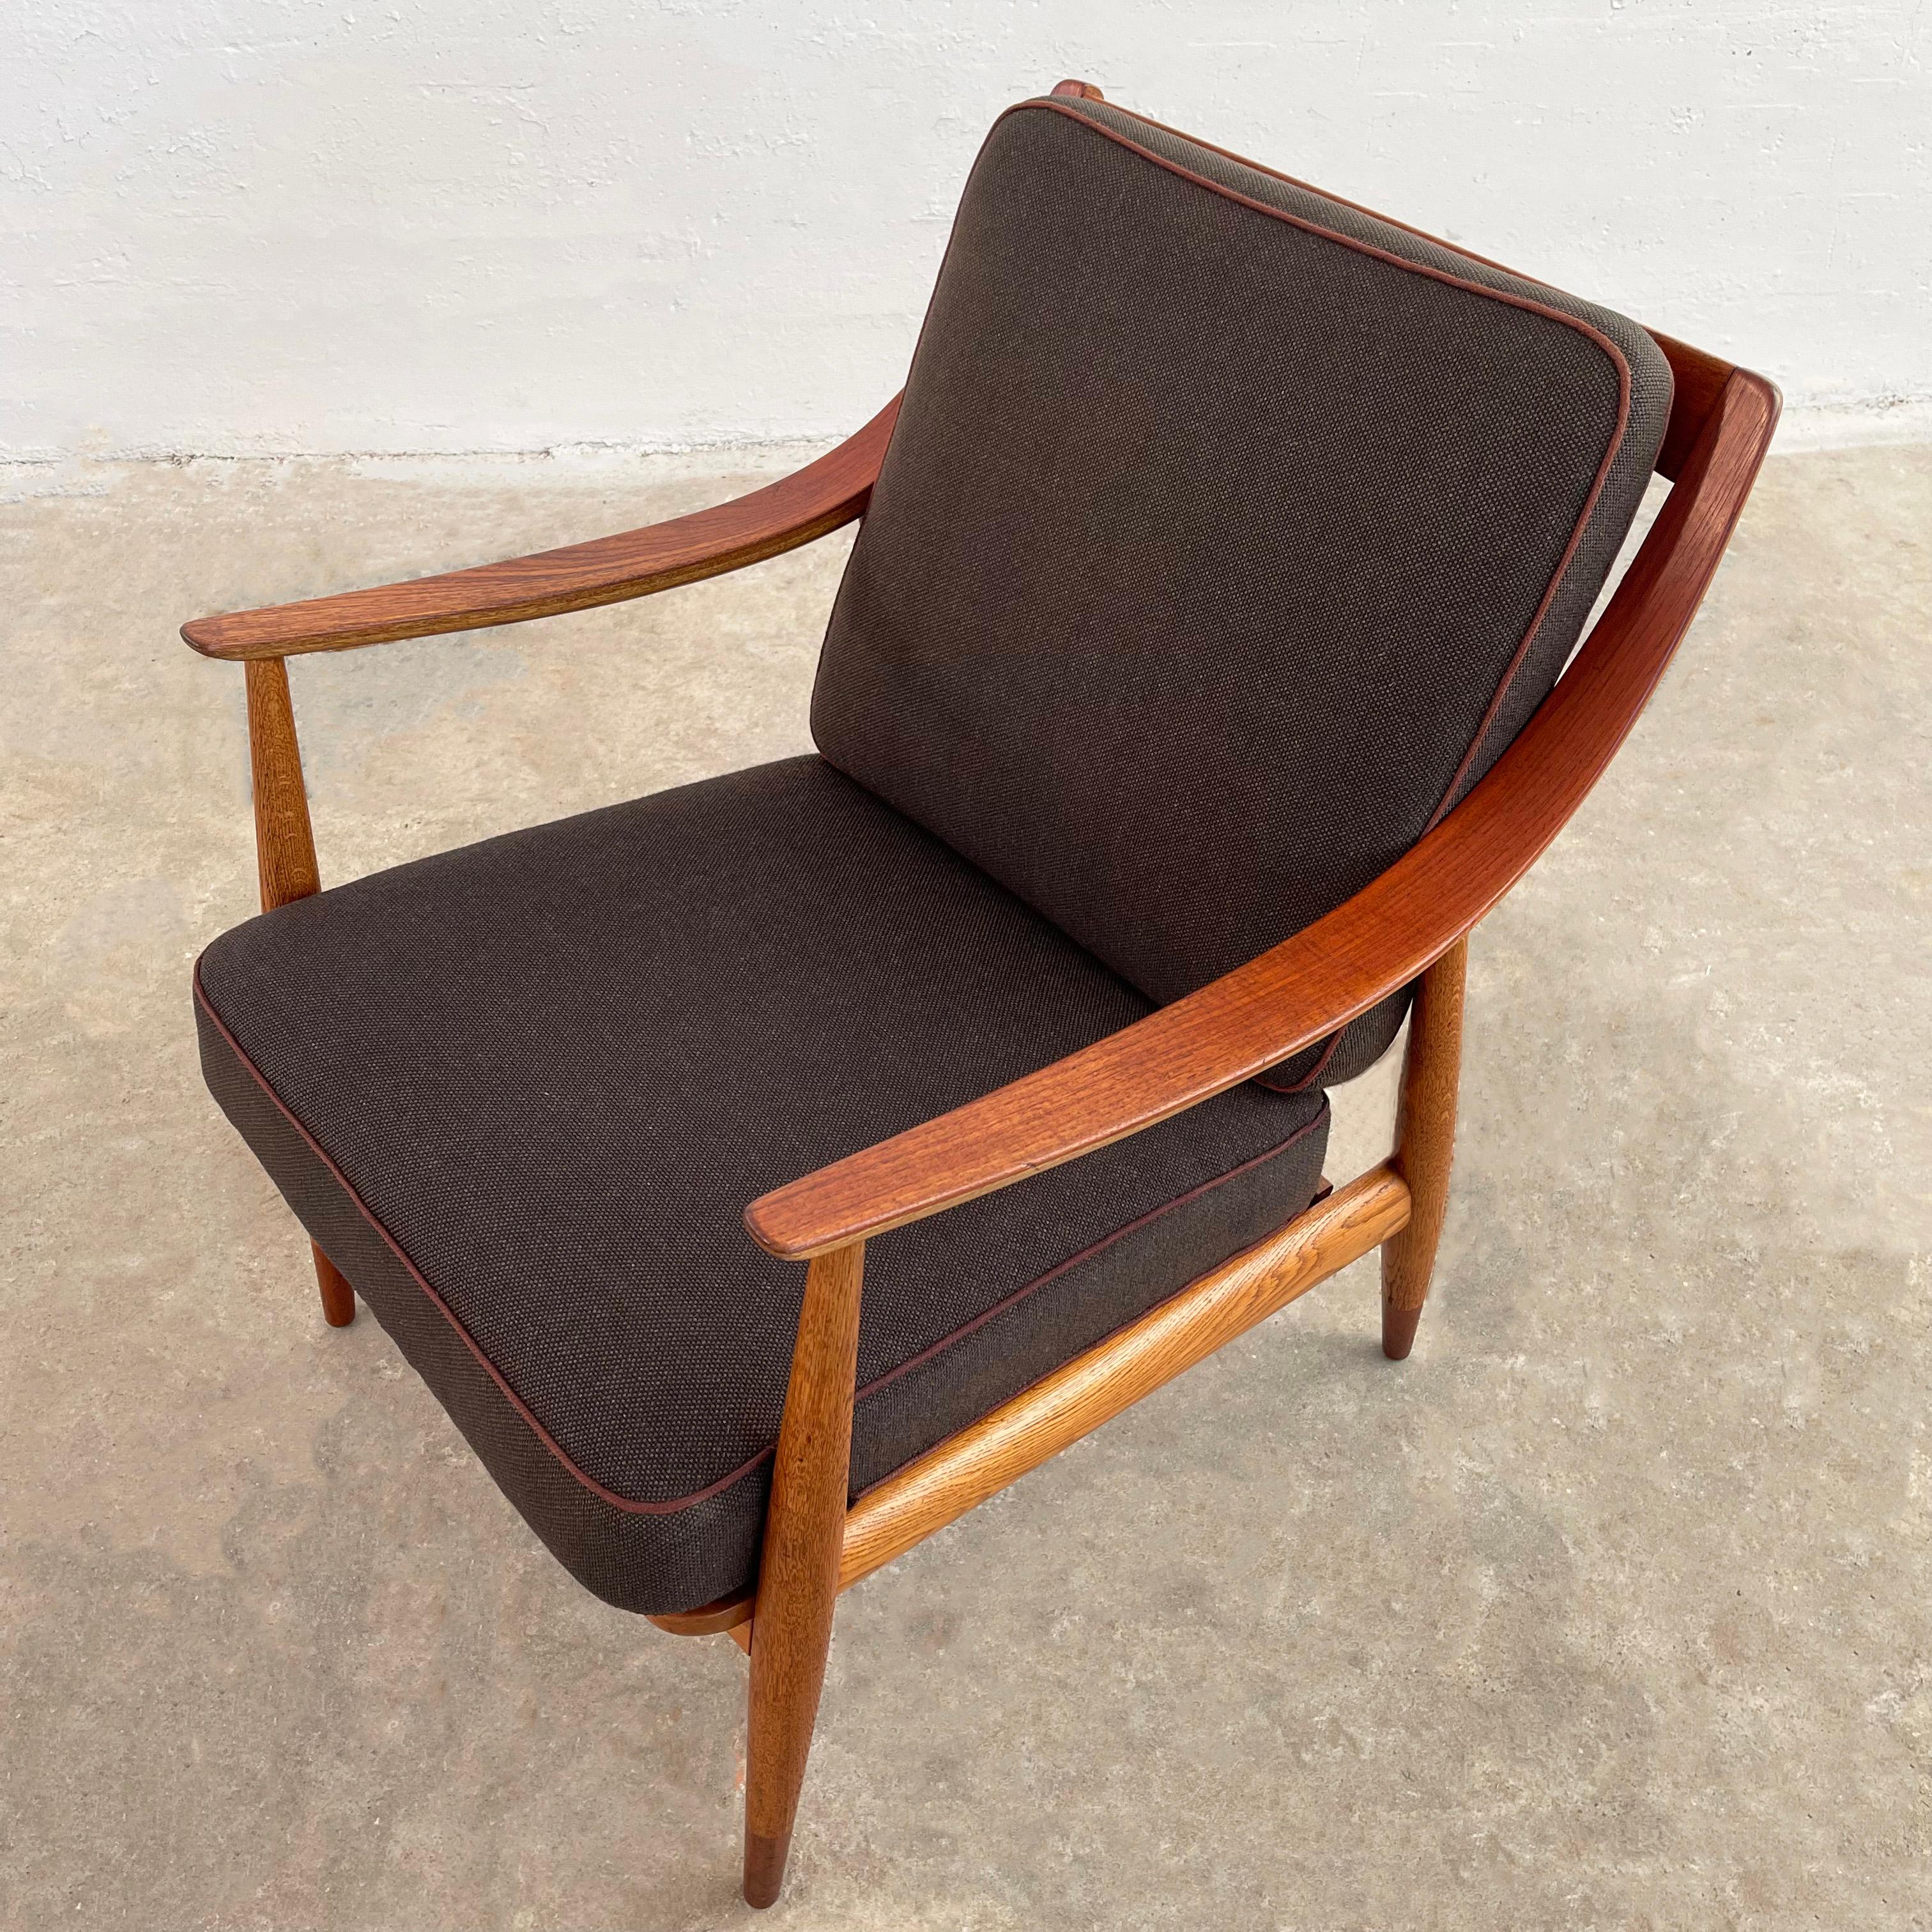 20th Century Scandinavian Modern Scoop Lounge Chair By Peter Hvidt And Orla Molgaard-Nielsen For Sale